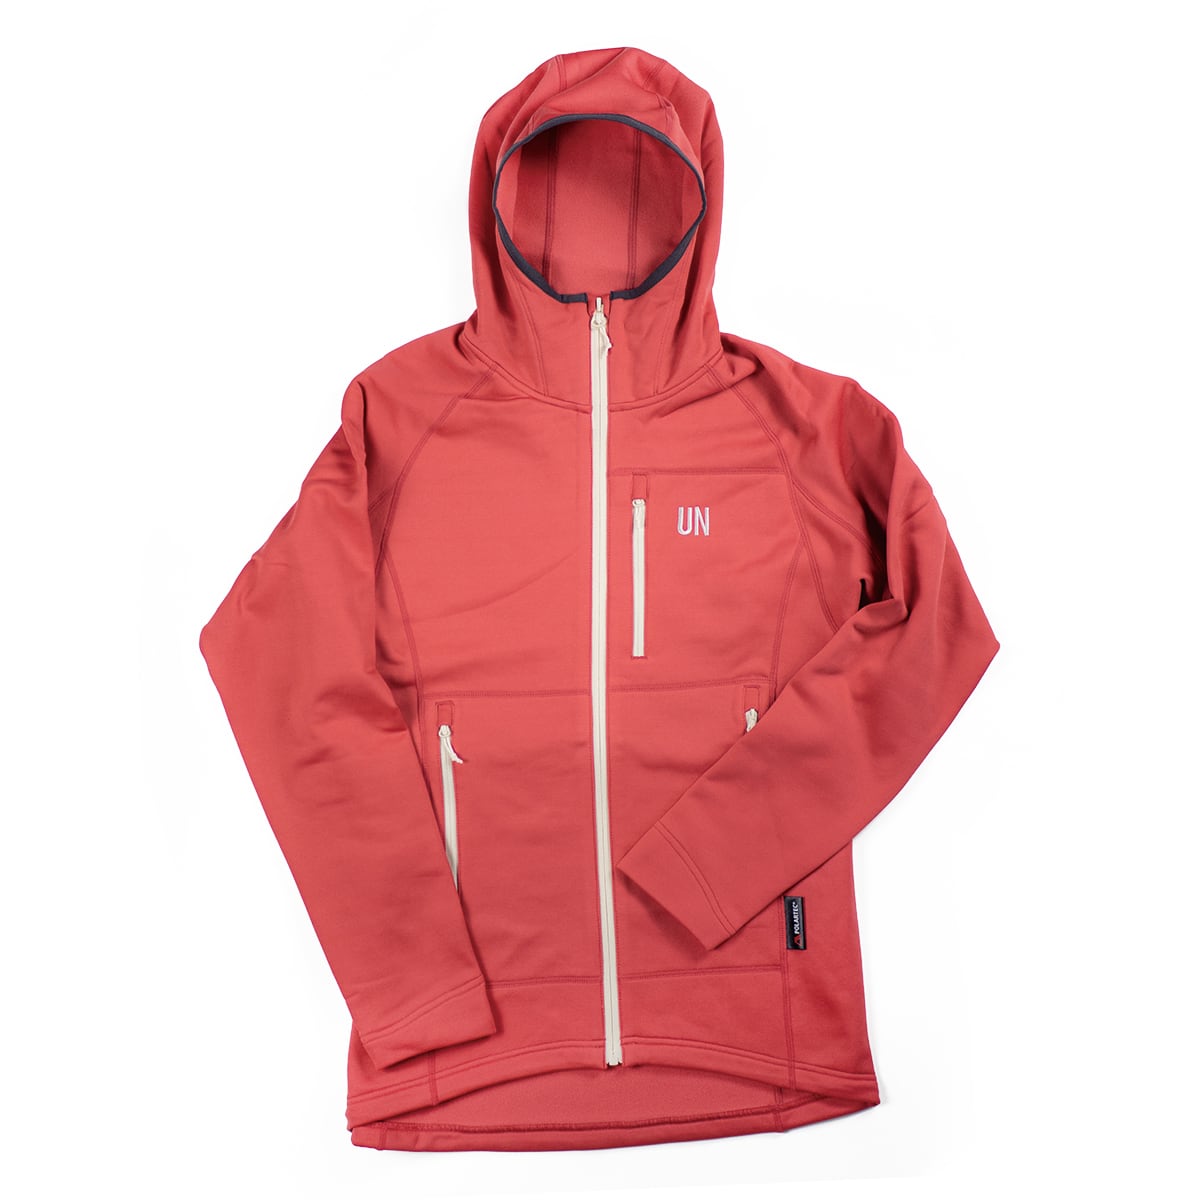 CDJapan : UN3100 Mid weight fleece hoody / Red / Proxy Shopping 